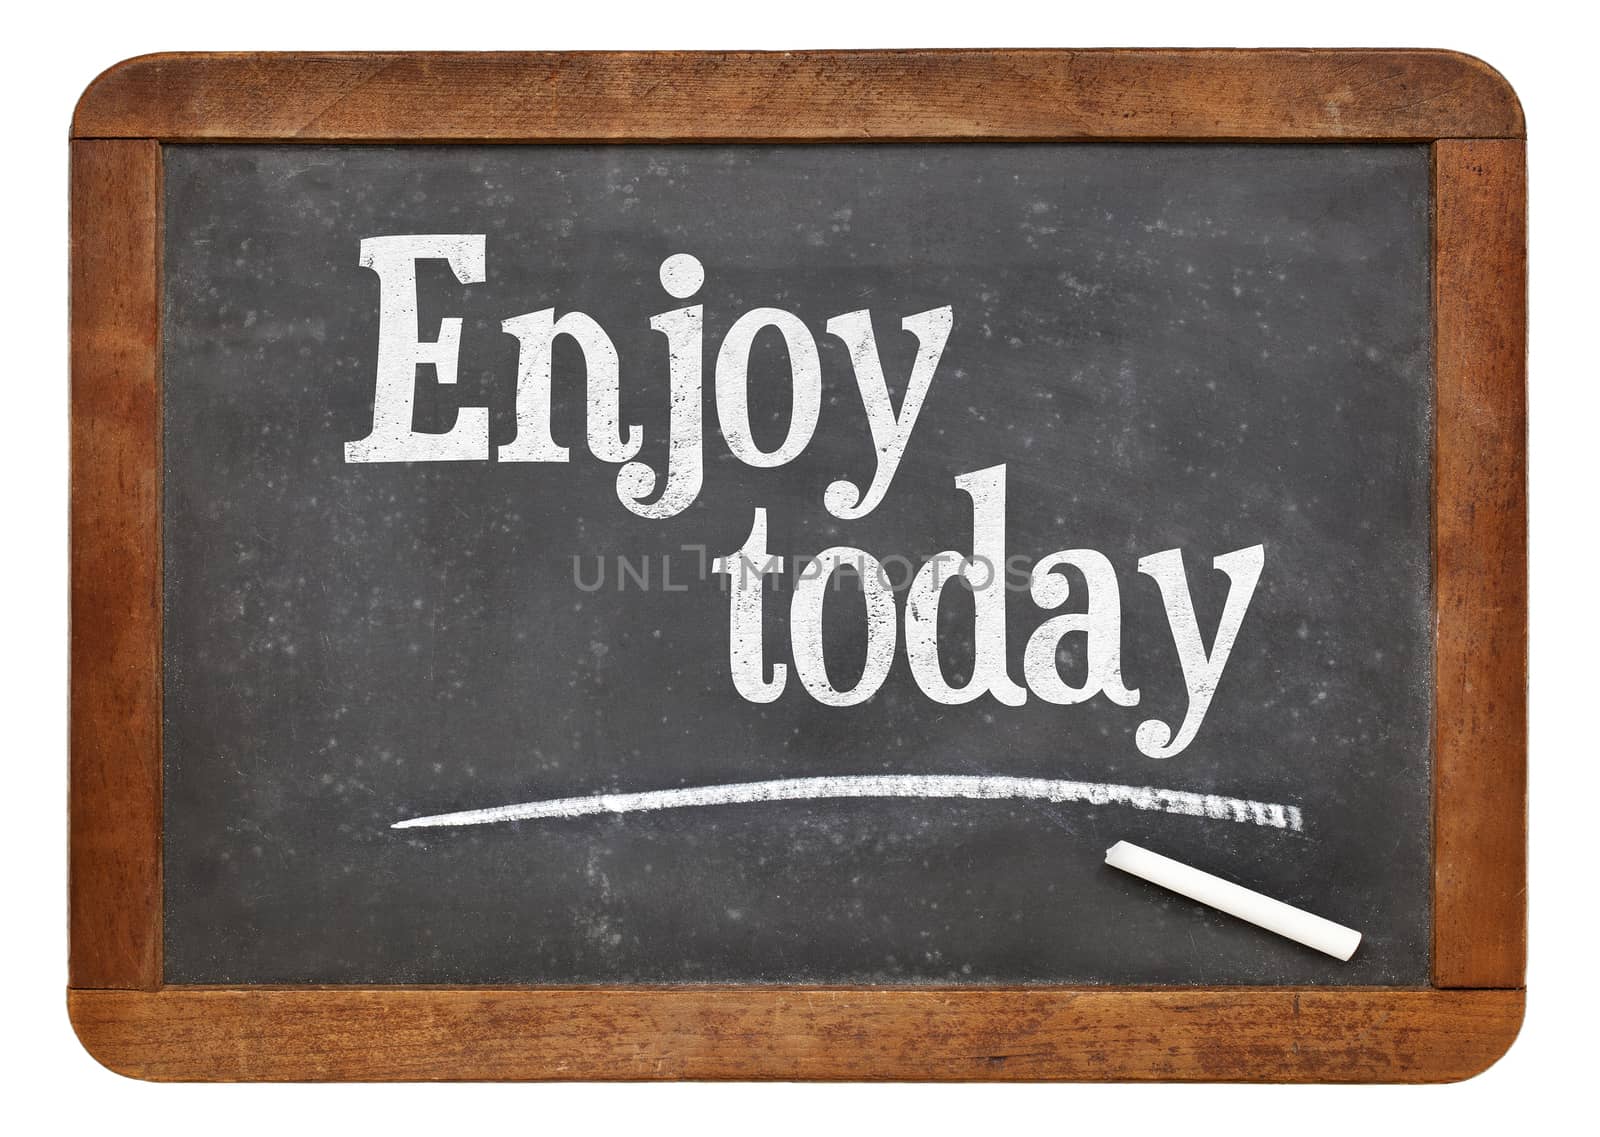 Enjoy today - text on blackboard by PixelsAway